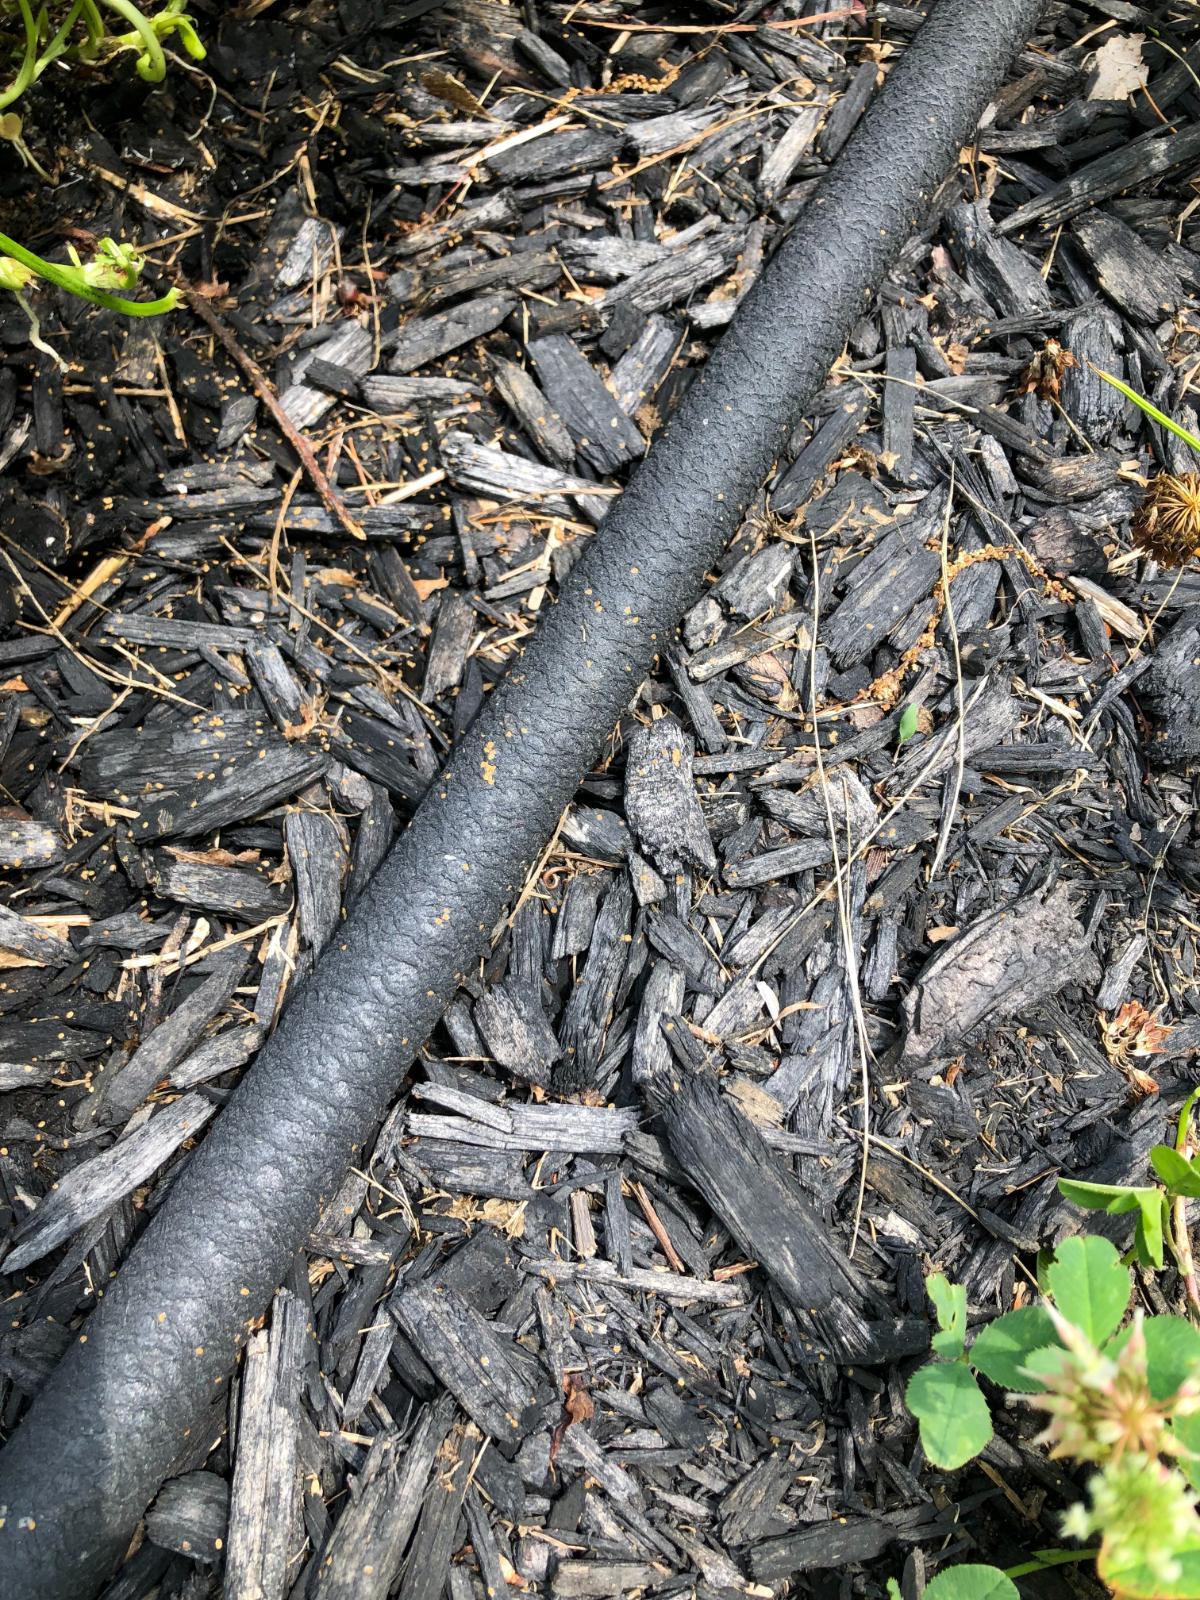 Soaker hoses in the garden